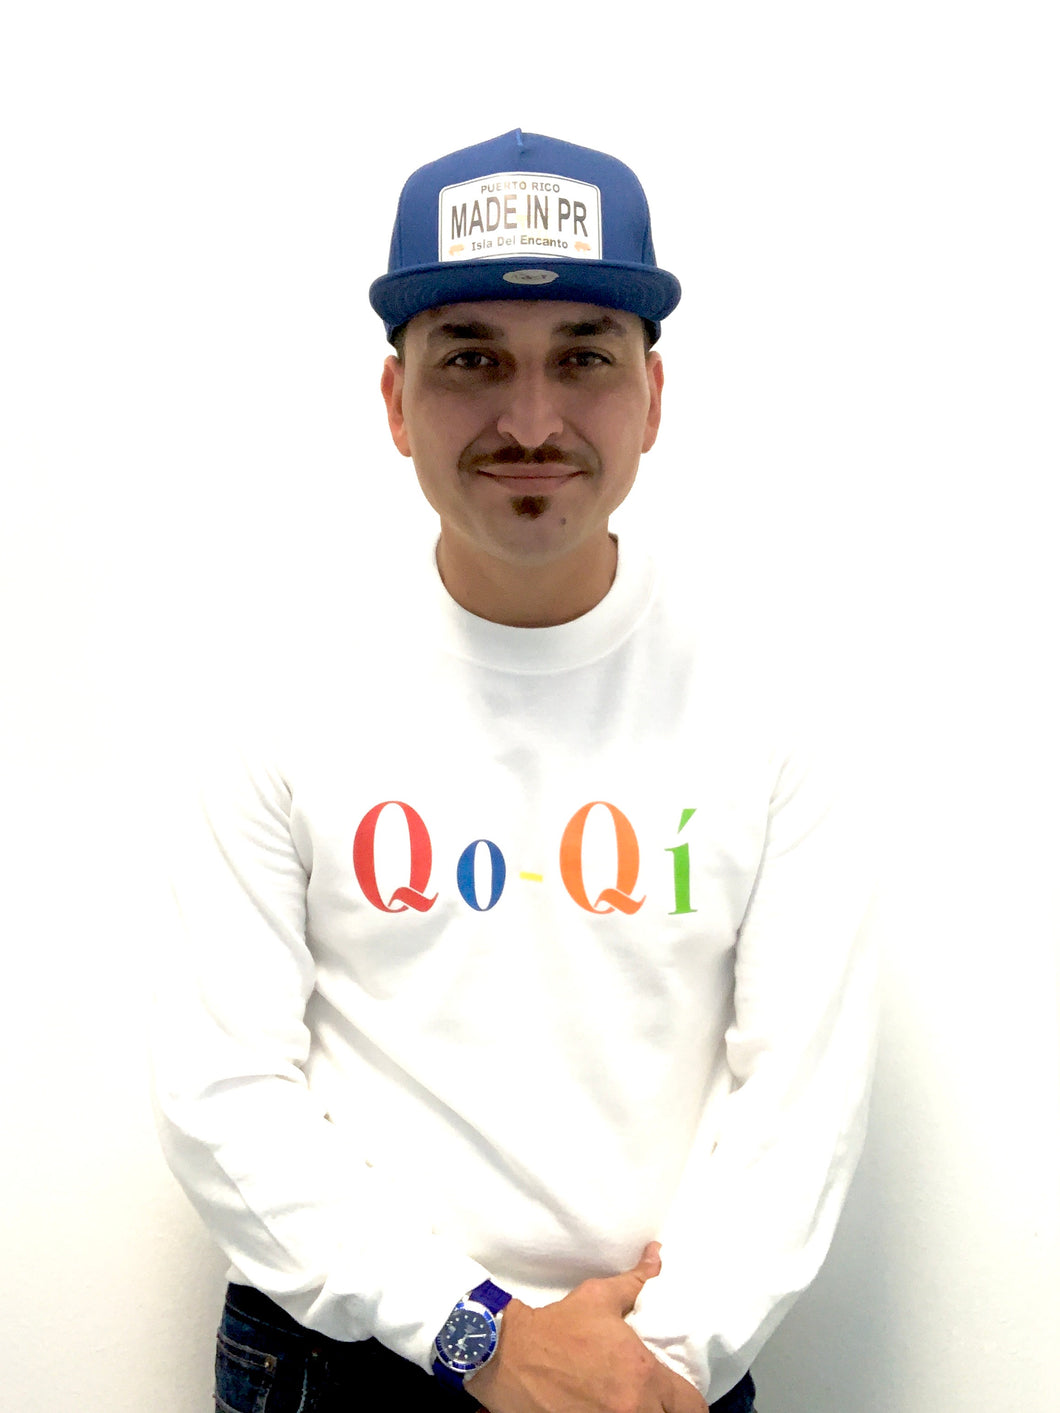 QoQi Logo Multicolors